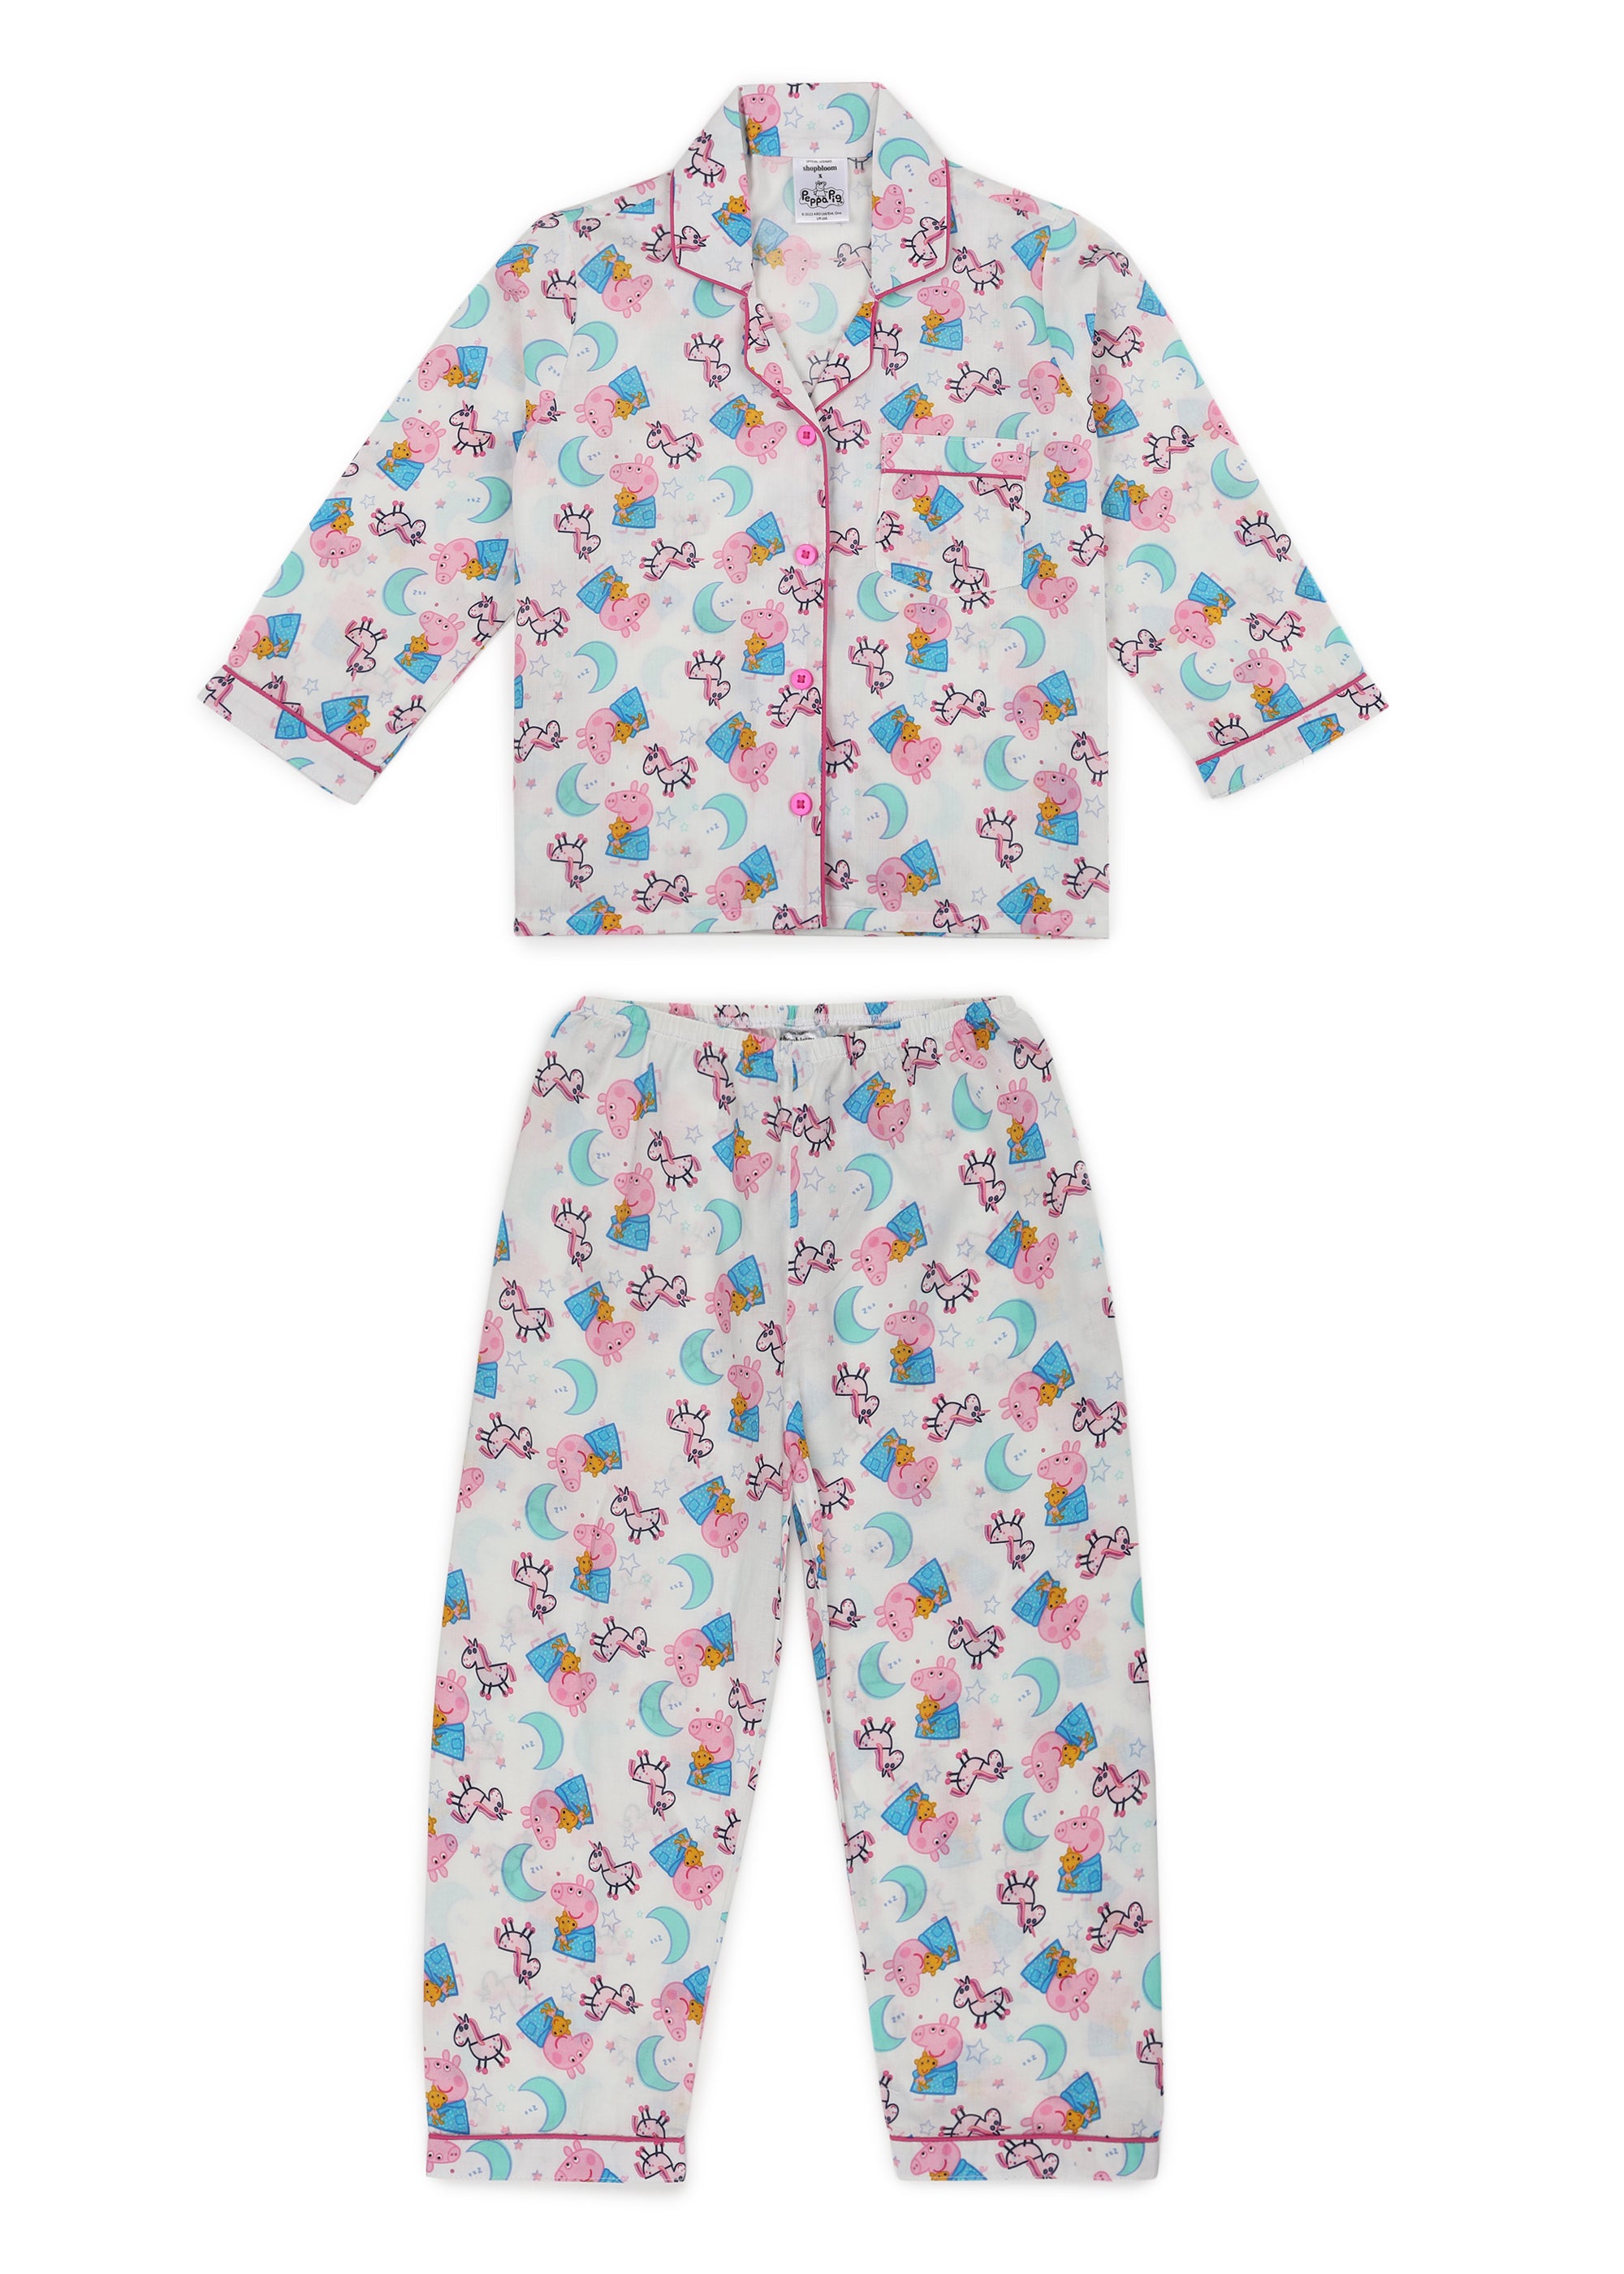 Peppa and Unicorns Print Long Sleeve Kids Night Suit - Shopbloom